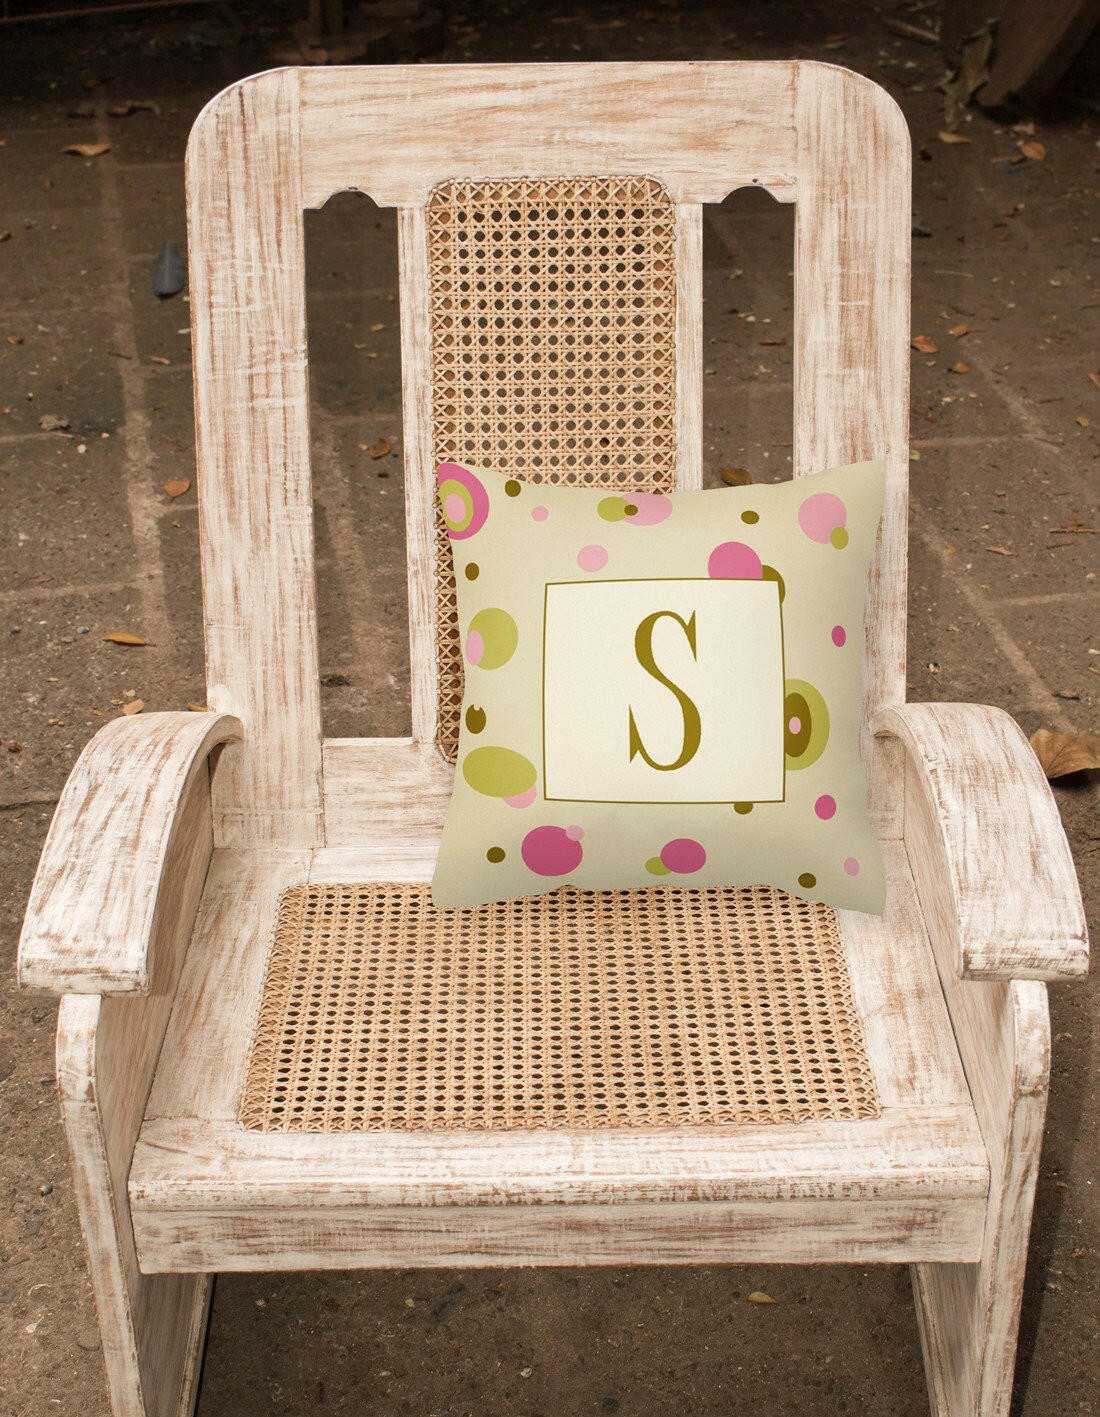 Letter S Initial Monogram - Tan Dots Decorative   Canvas Fabric Pillow - the-store.com